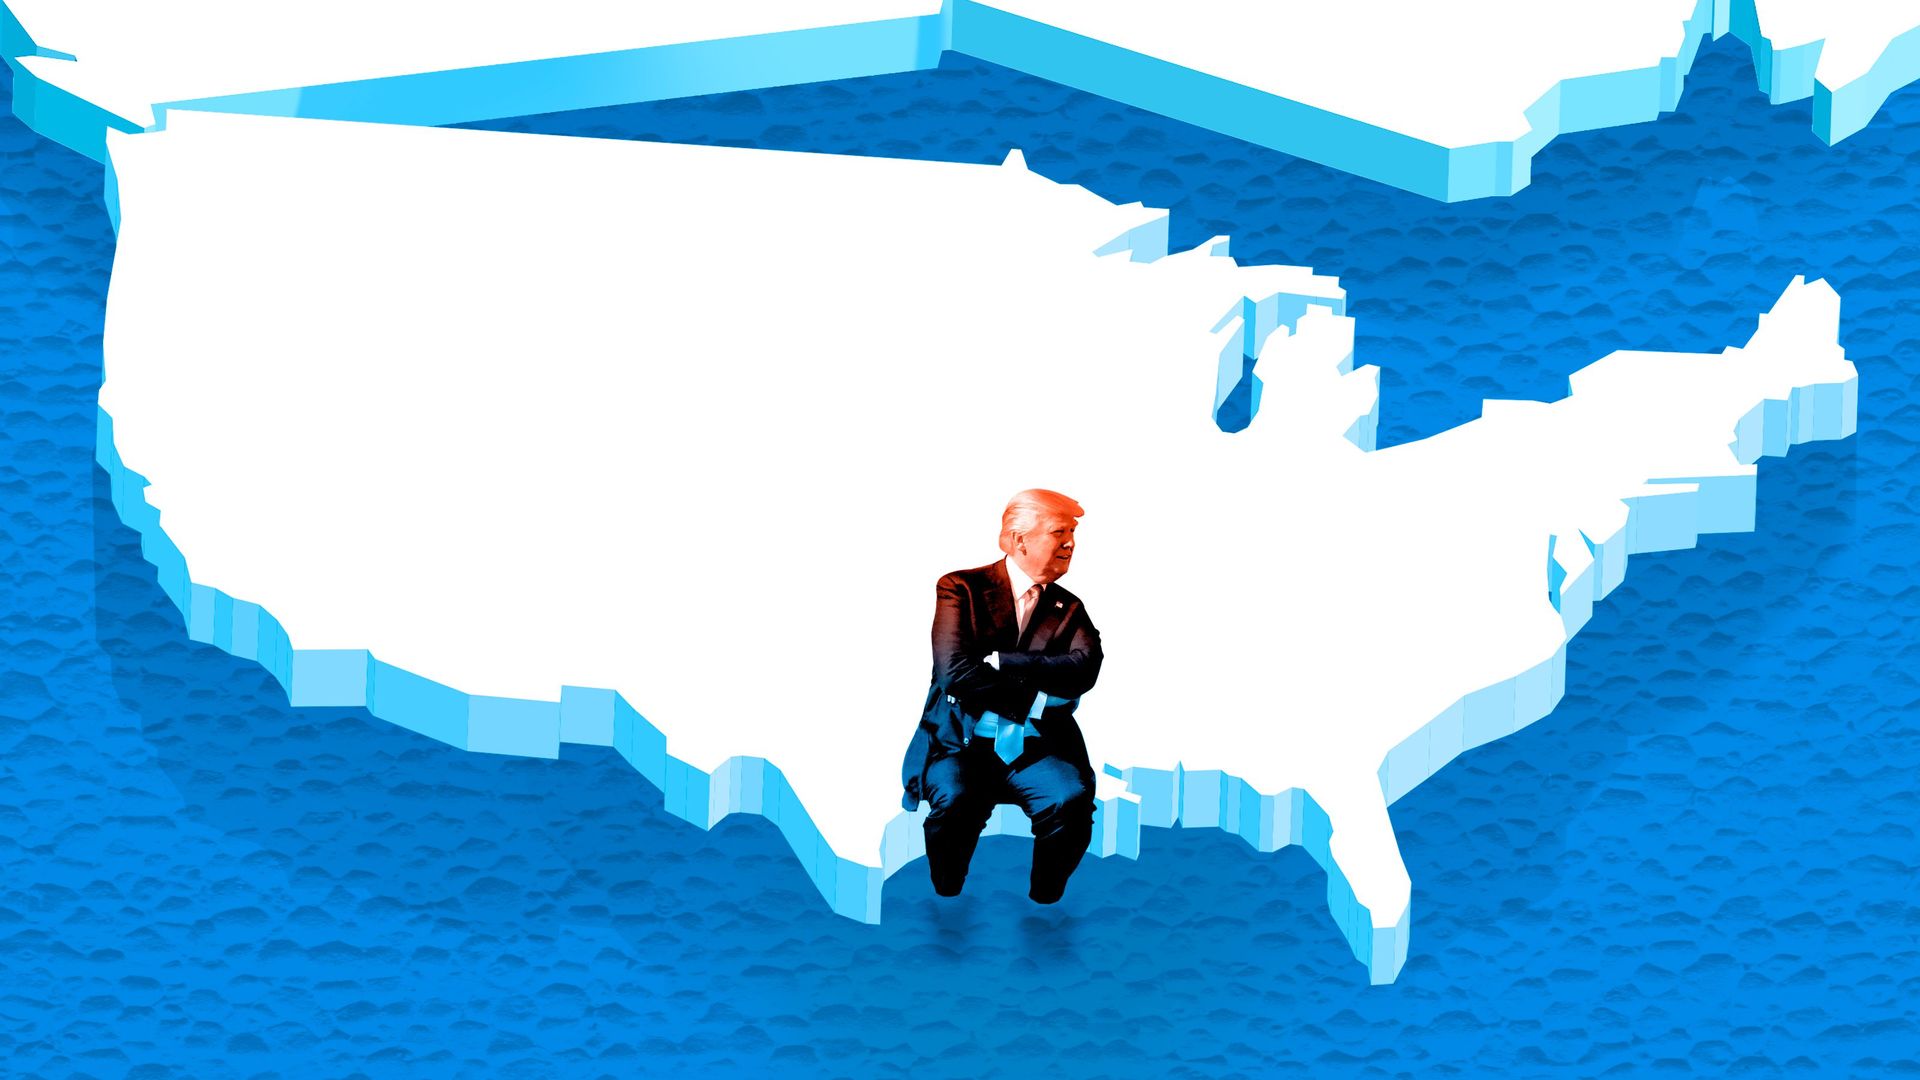 Illustration of President Trump sitting on an iceberg shaped like the U.S.